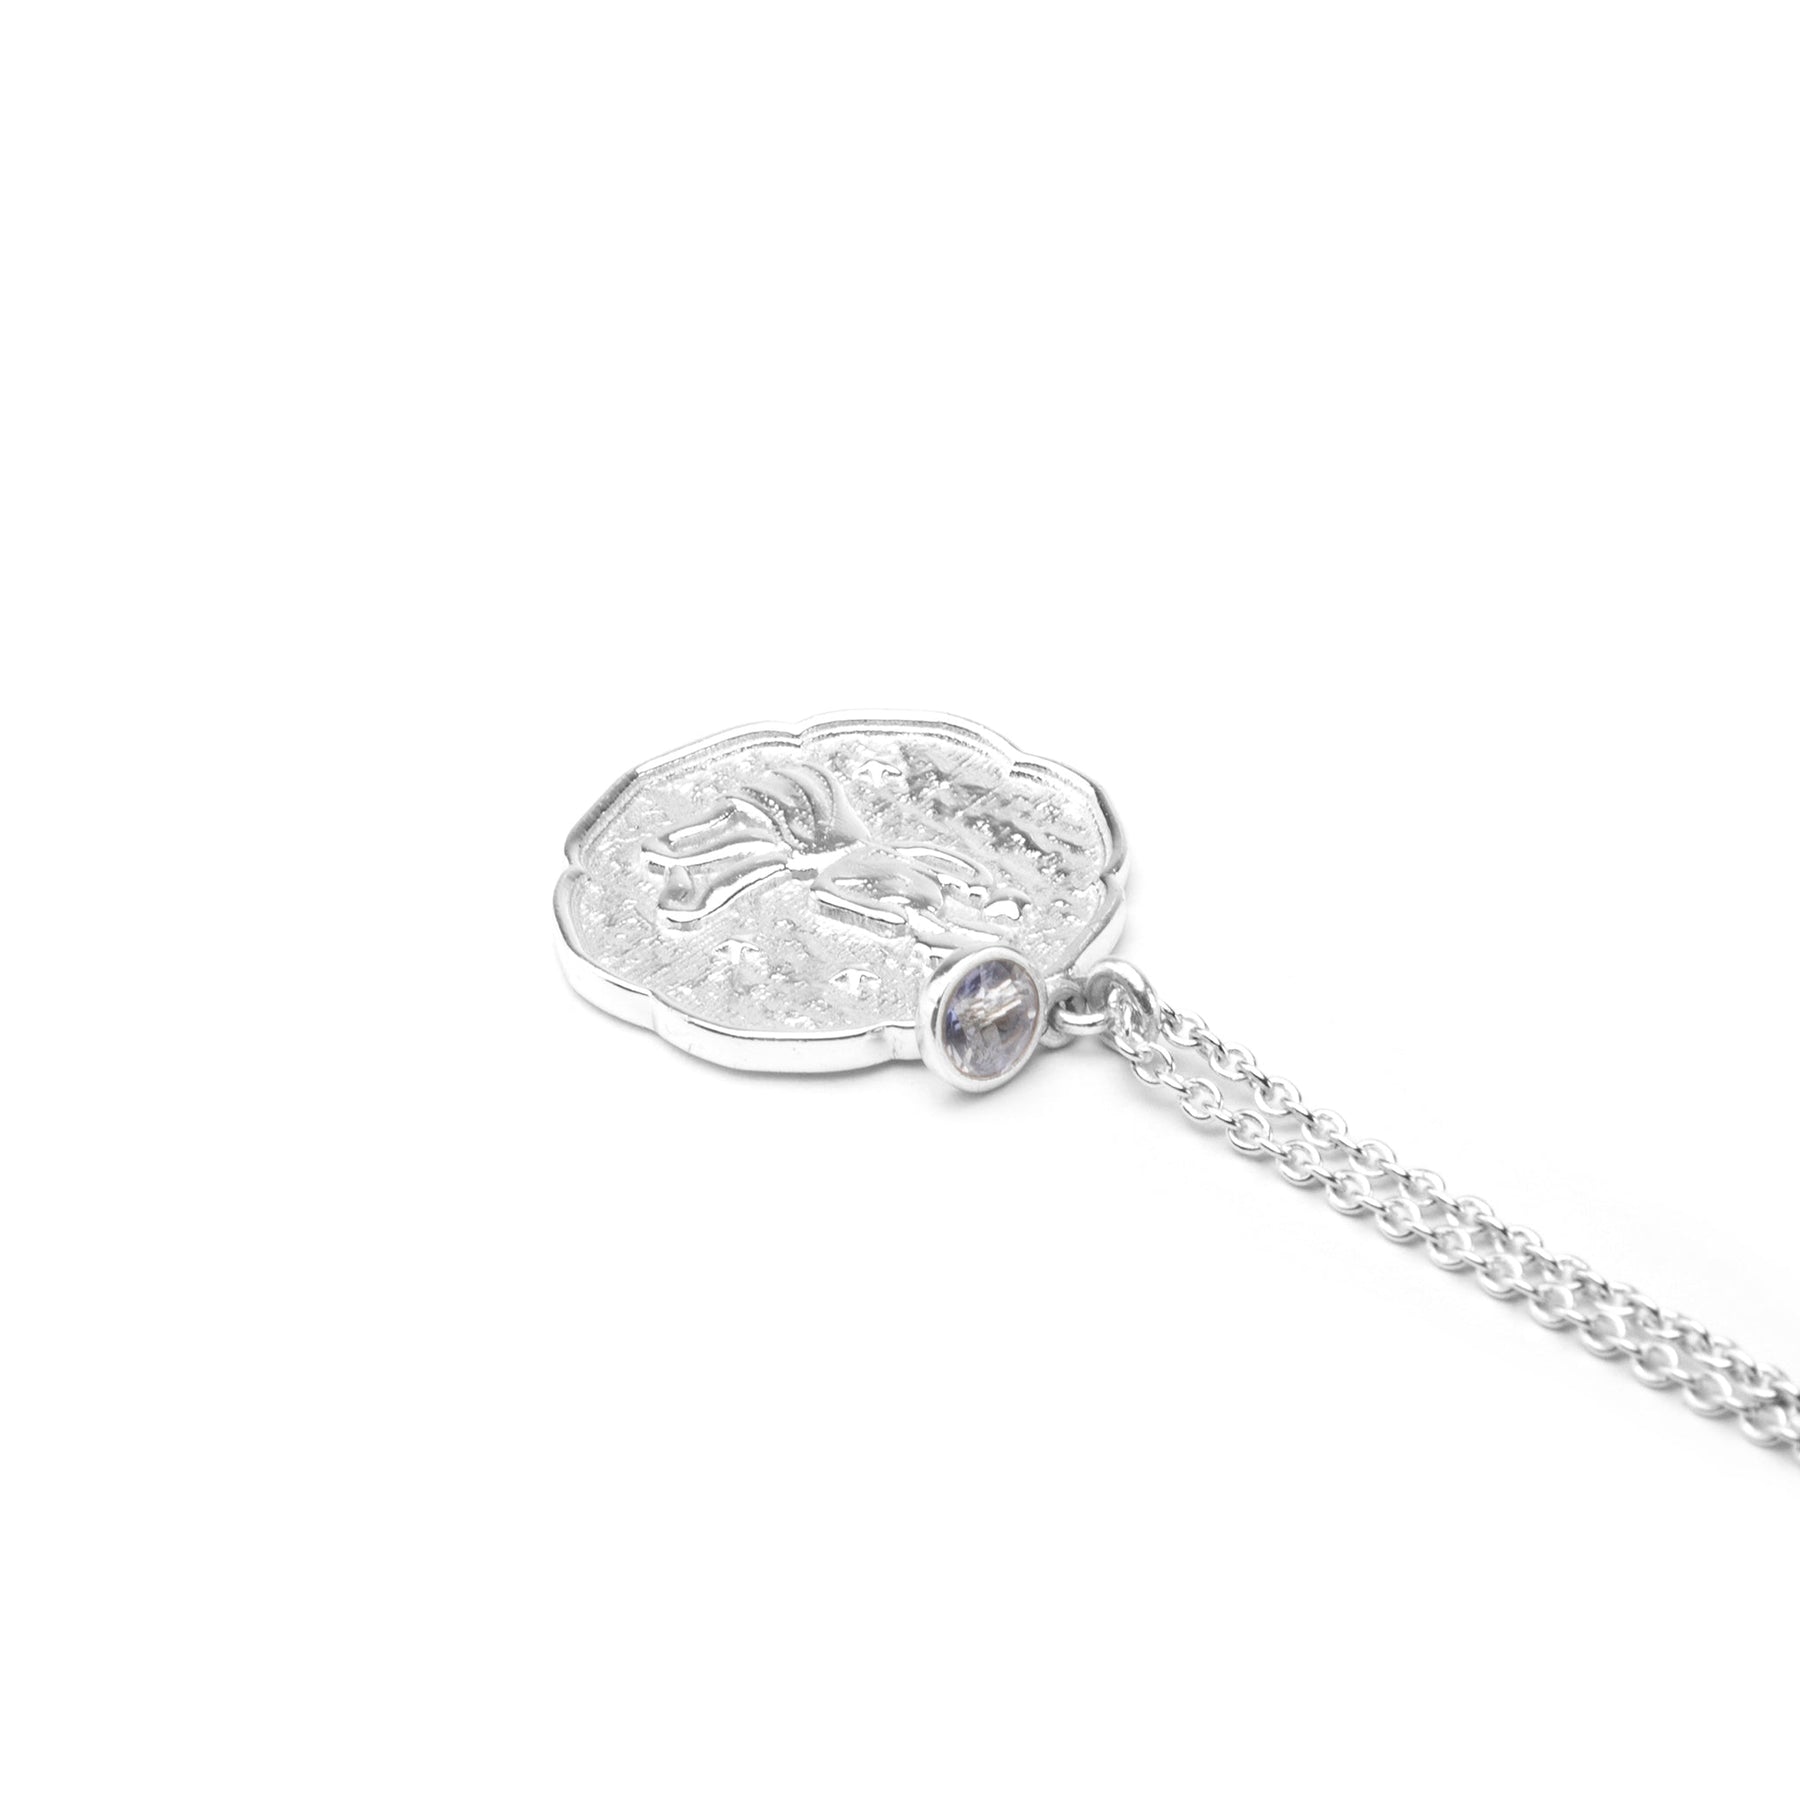 Virgo Necklace With Birth Stone Charm